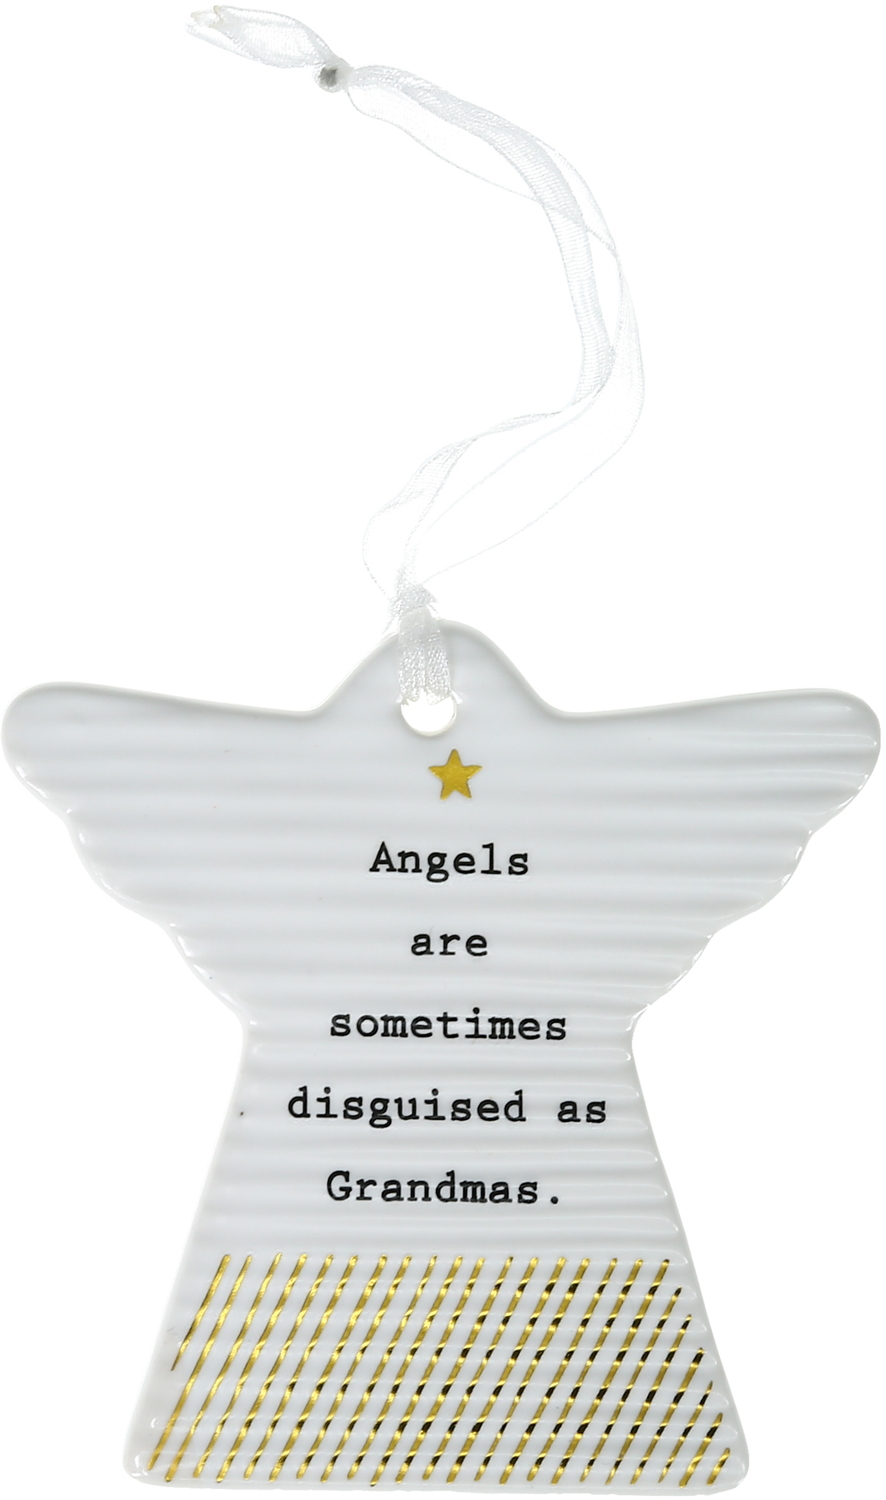 Grandmas by Thoughtful Words - Grandmas - 3" Hanging Angel Plaque